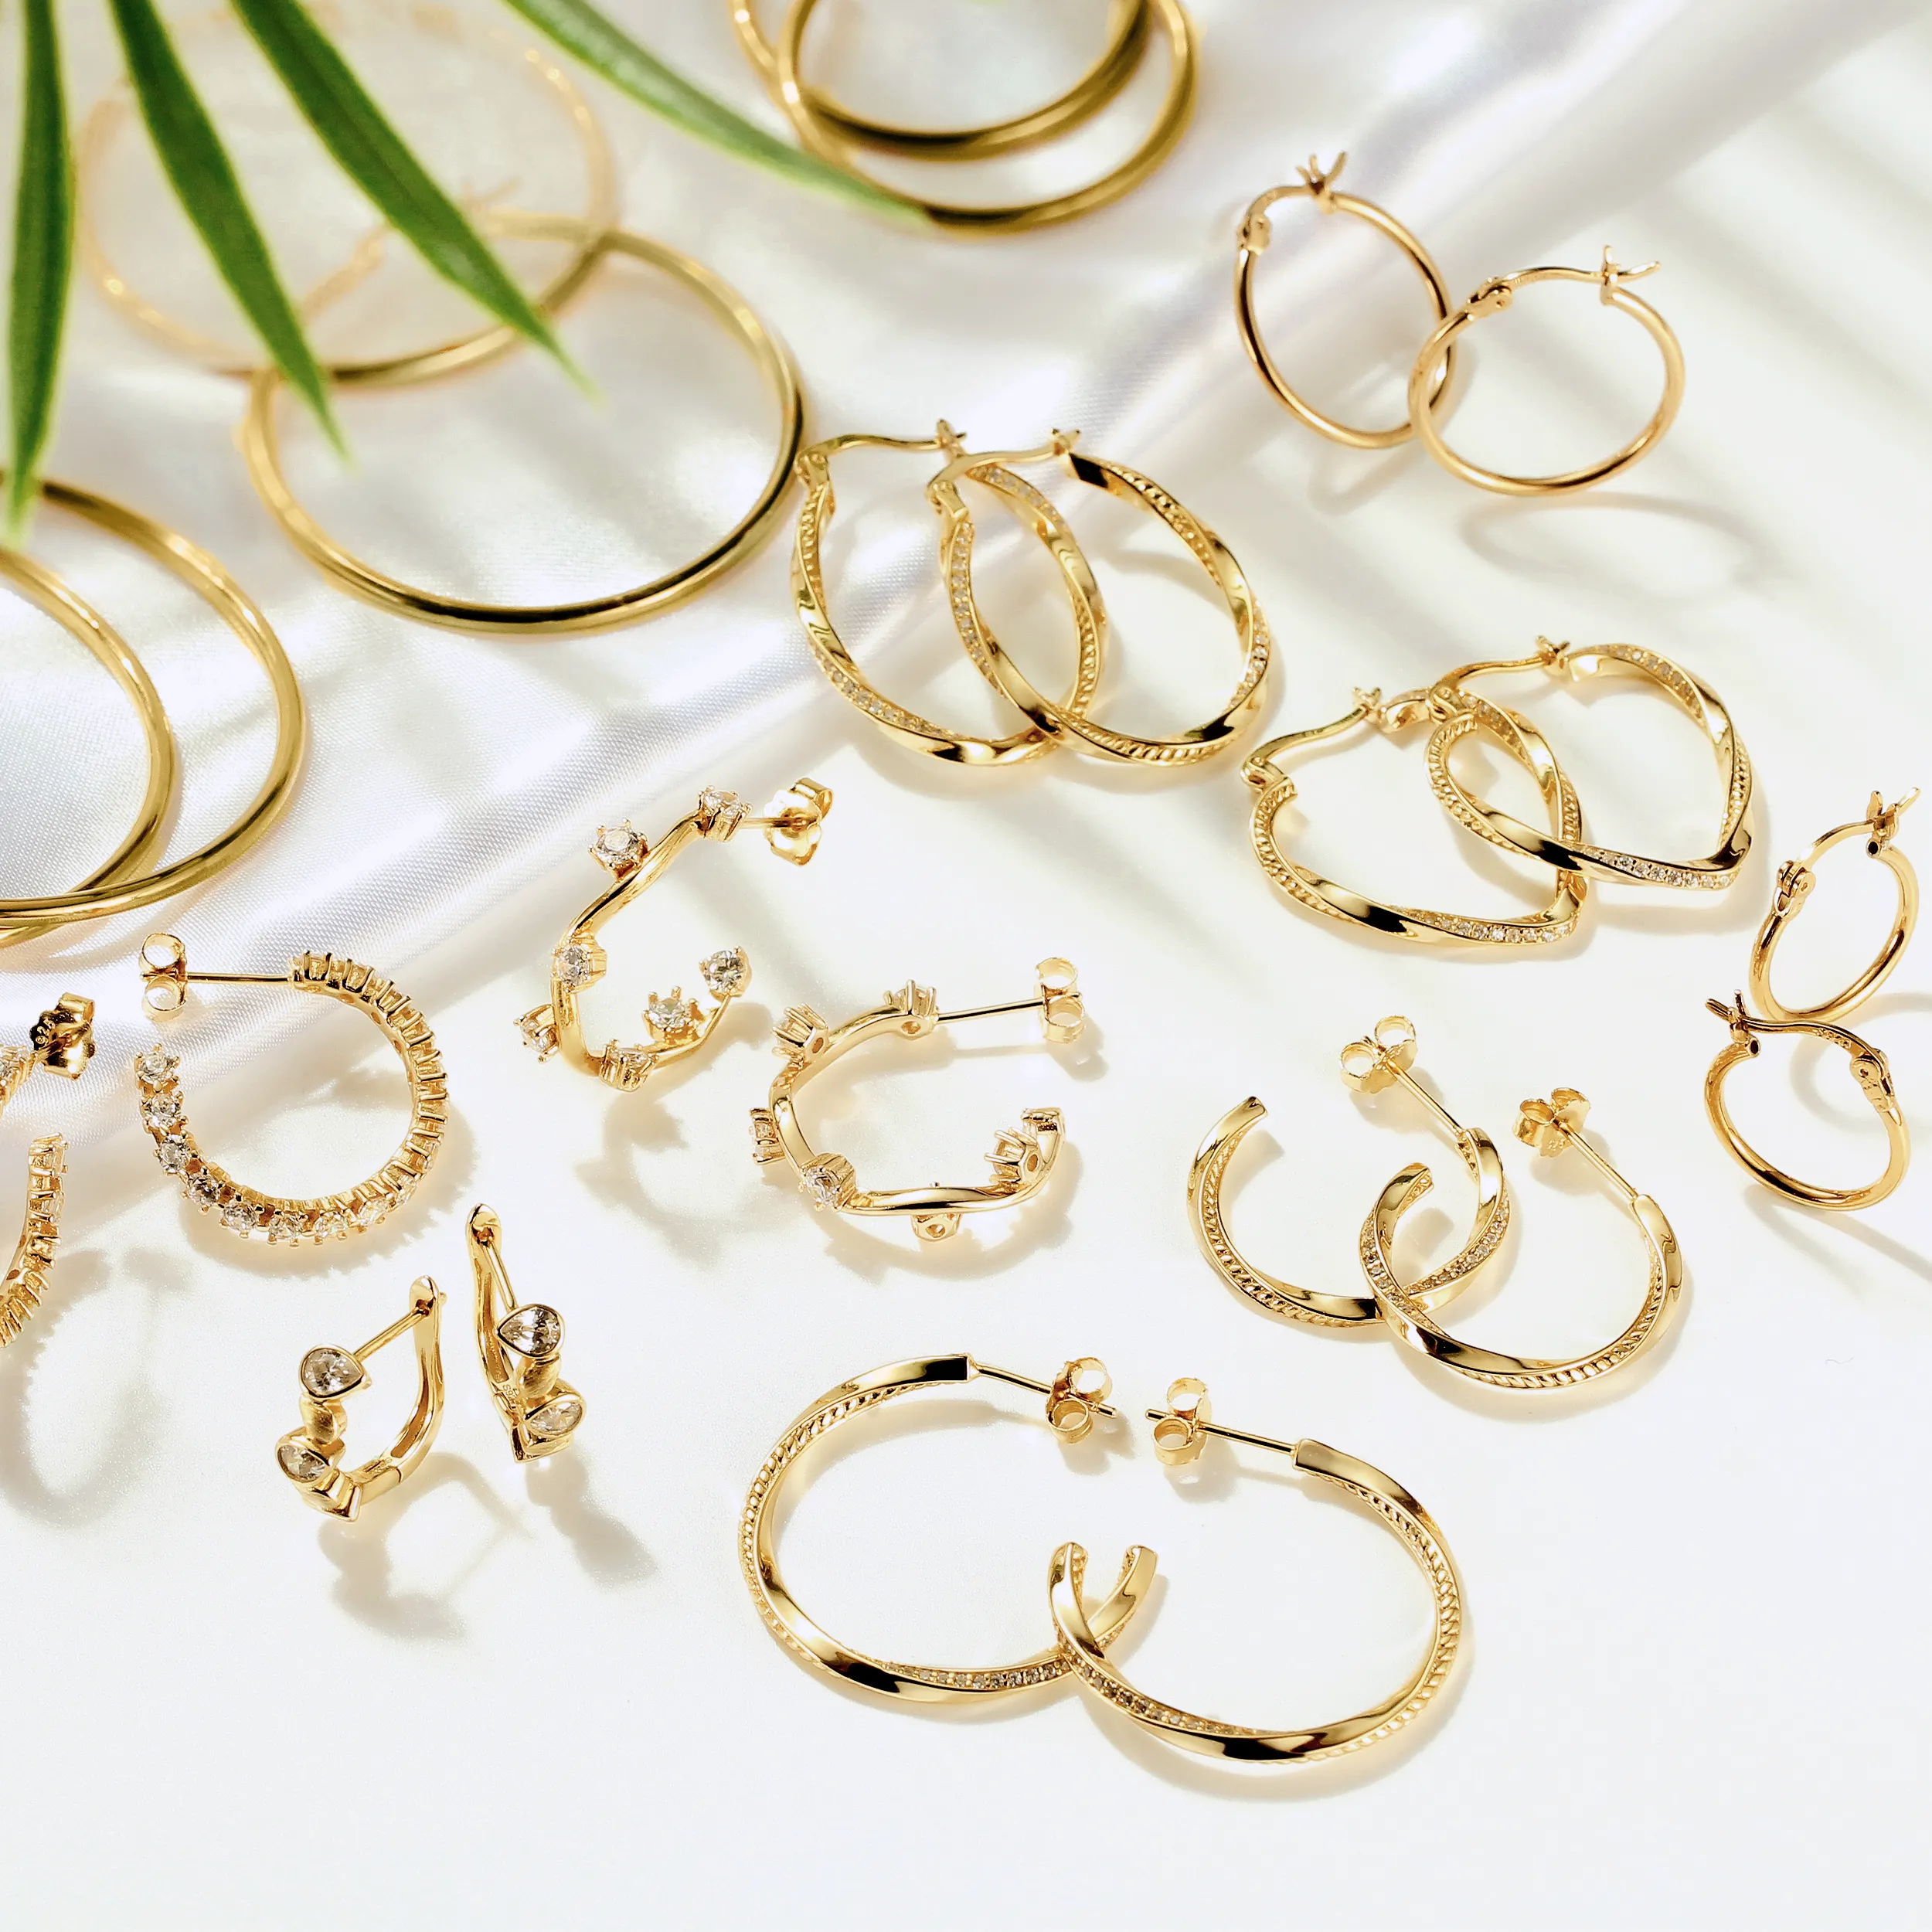 RINNTIN SEH Wholesale 14K Gold Jewelry Big Hoop Earrings Sterling Silver Gold Plated Custom Fashion Hoop Earrings For Women